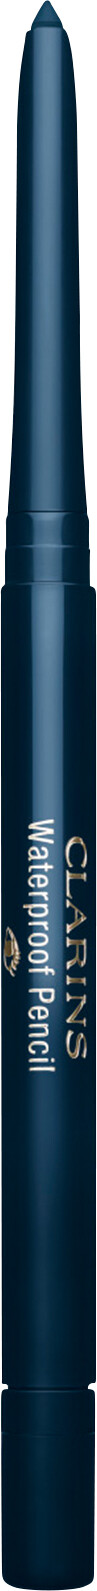 Clarins Waterproof Eye Pencil 0.29g 03 - Blue Orchid